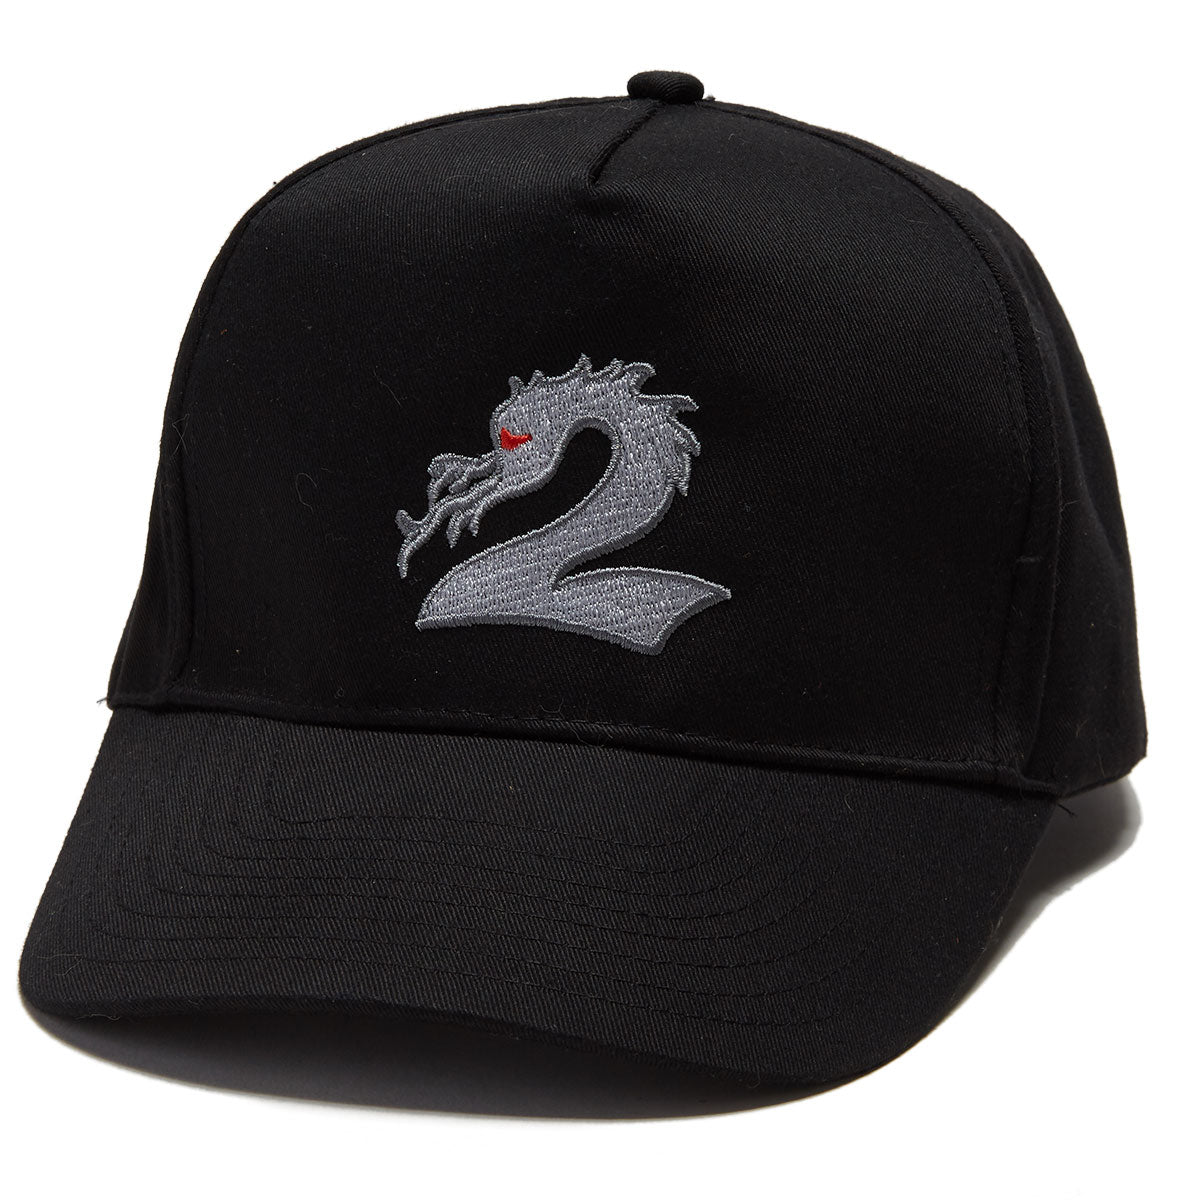 2 Riser Pads Dragon Hat - Black image 1